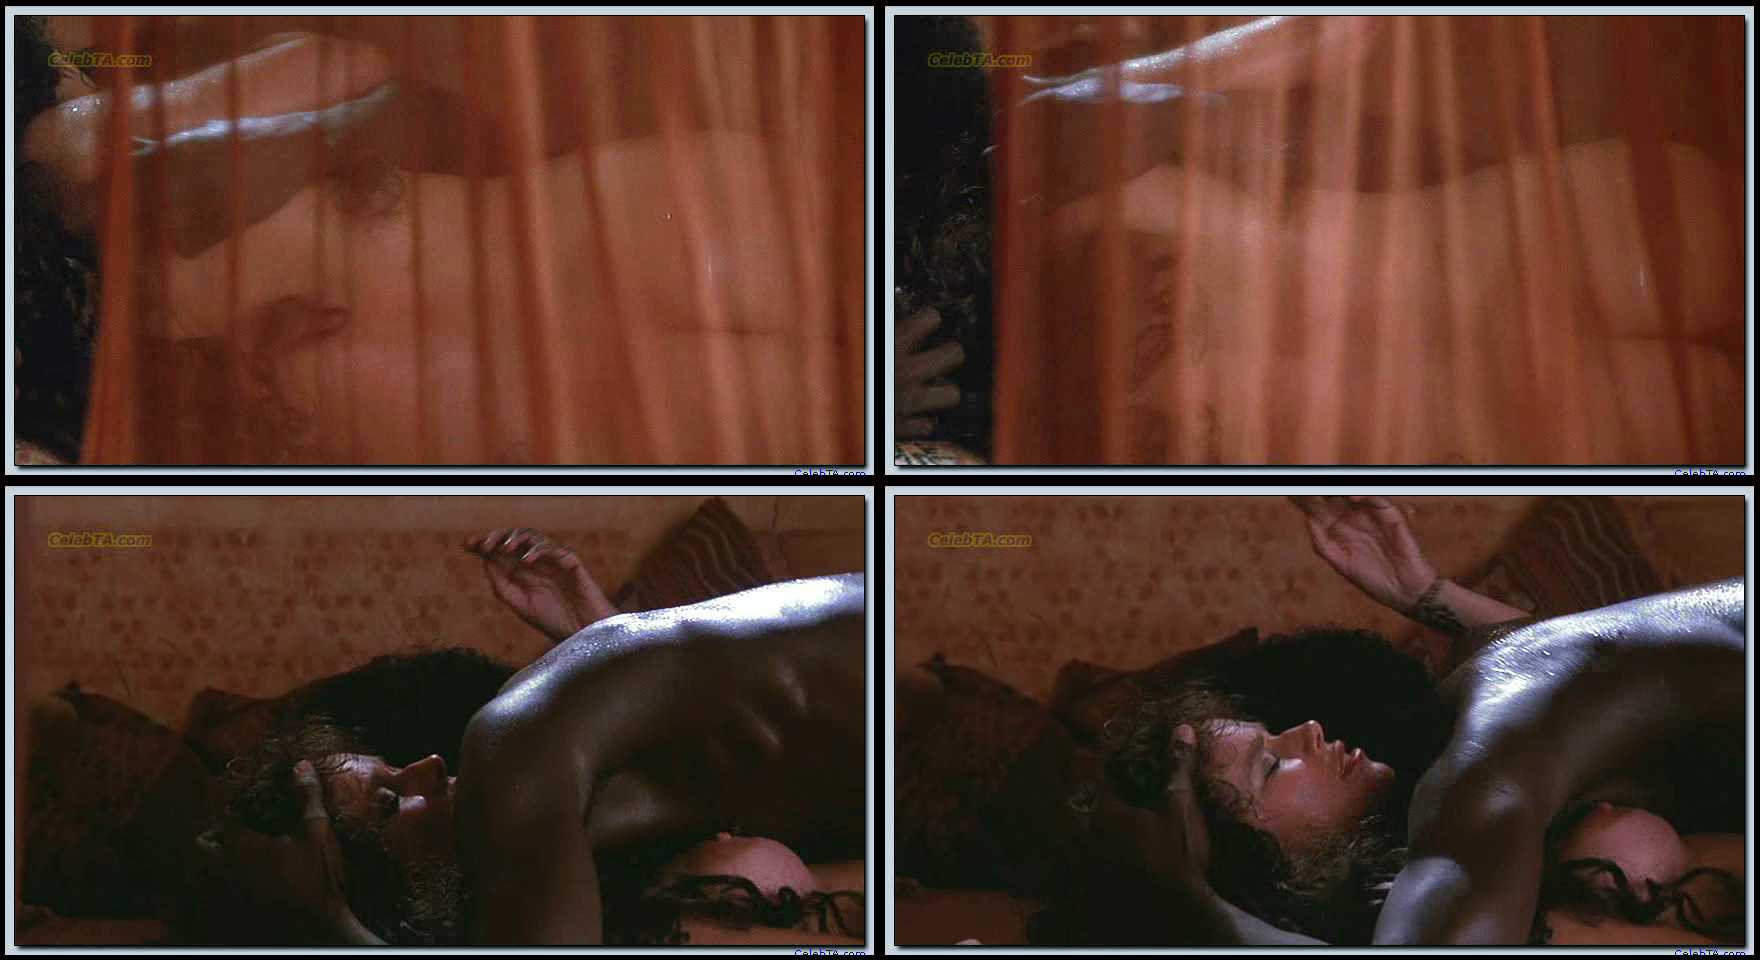 Barbara Hershey nude pics.